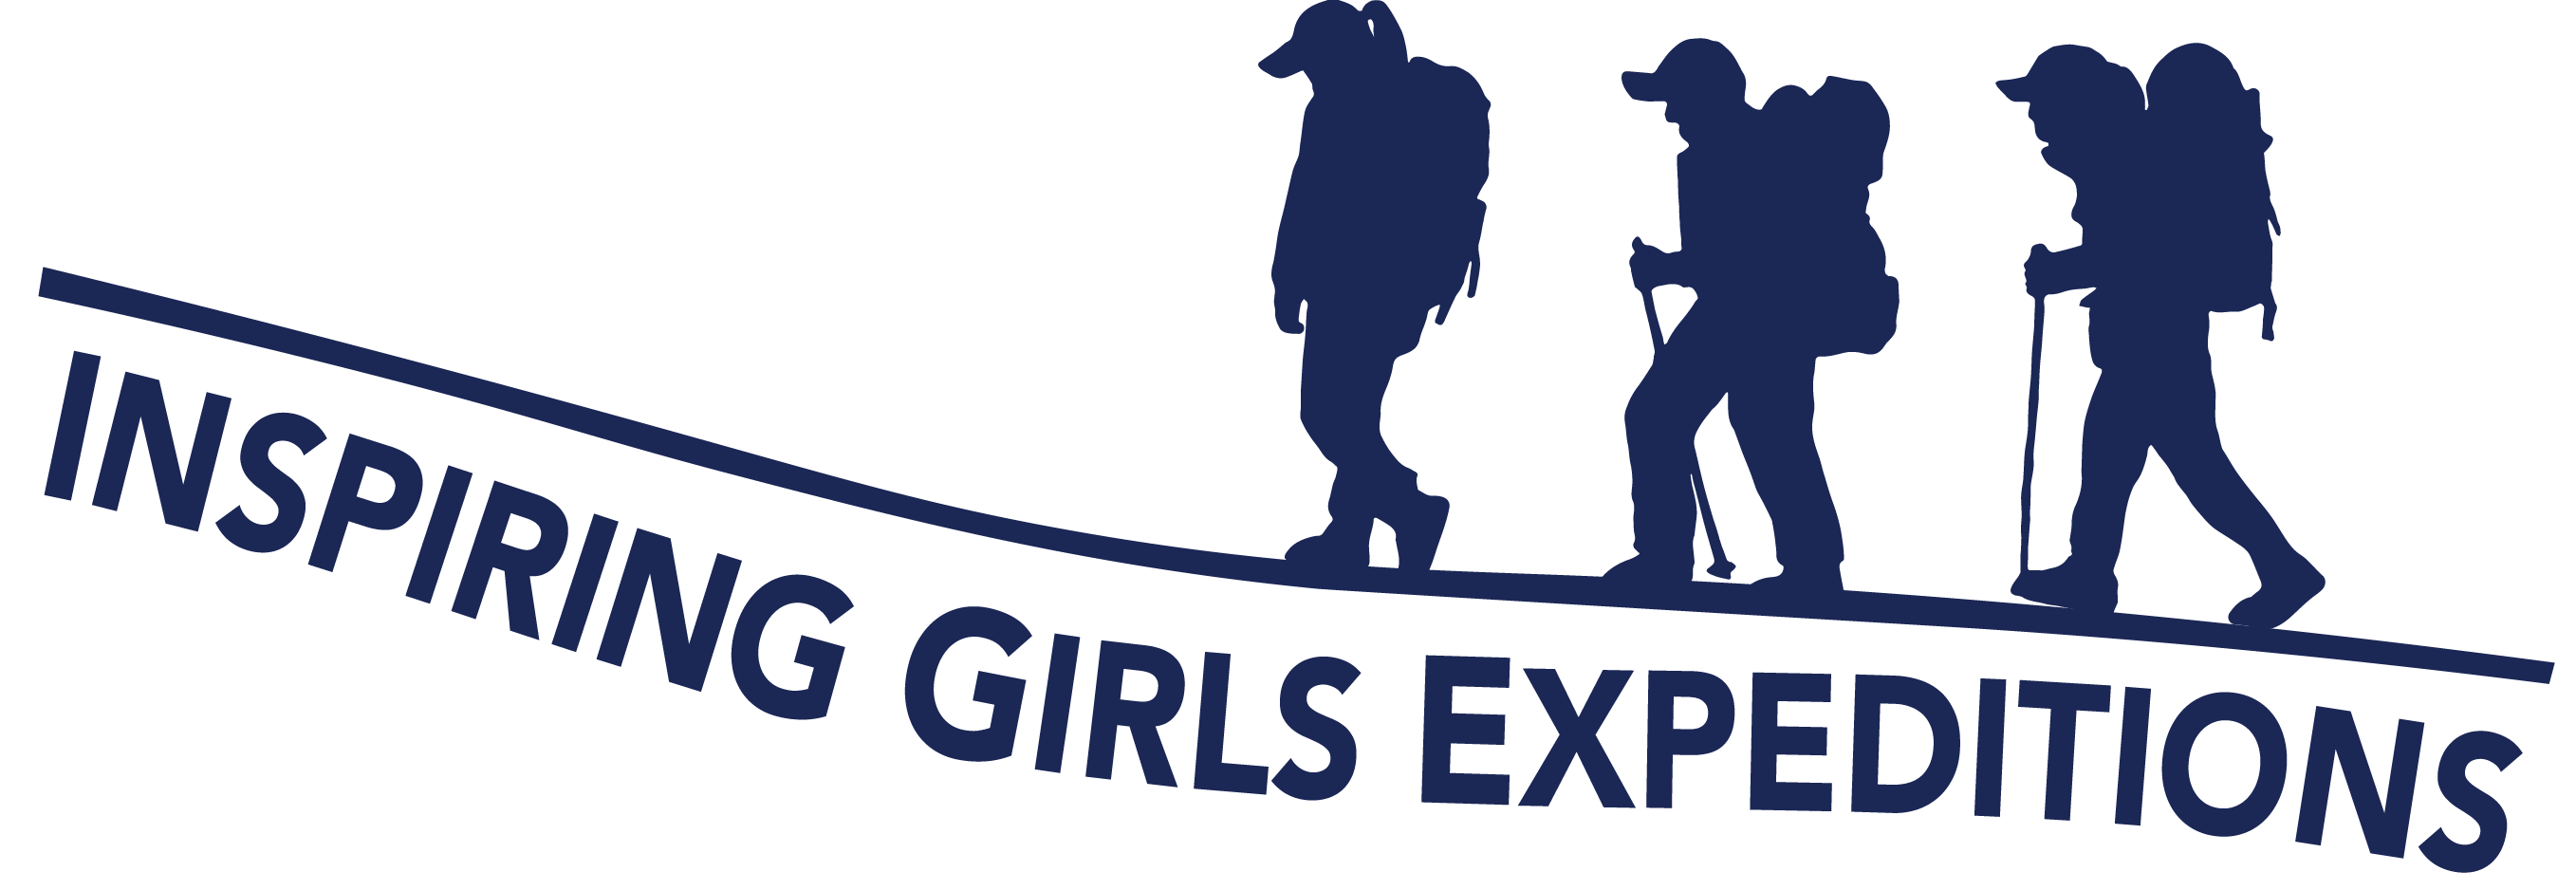 Inspiring Girls Expeditions logo